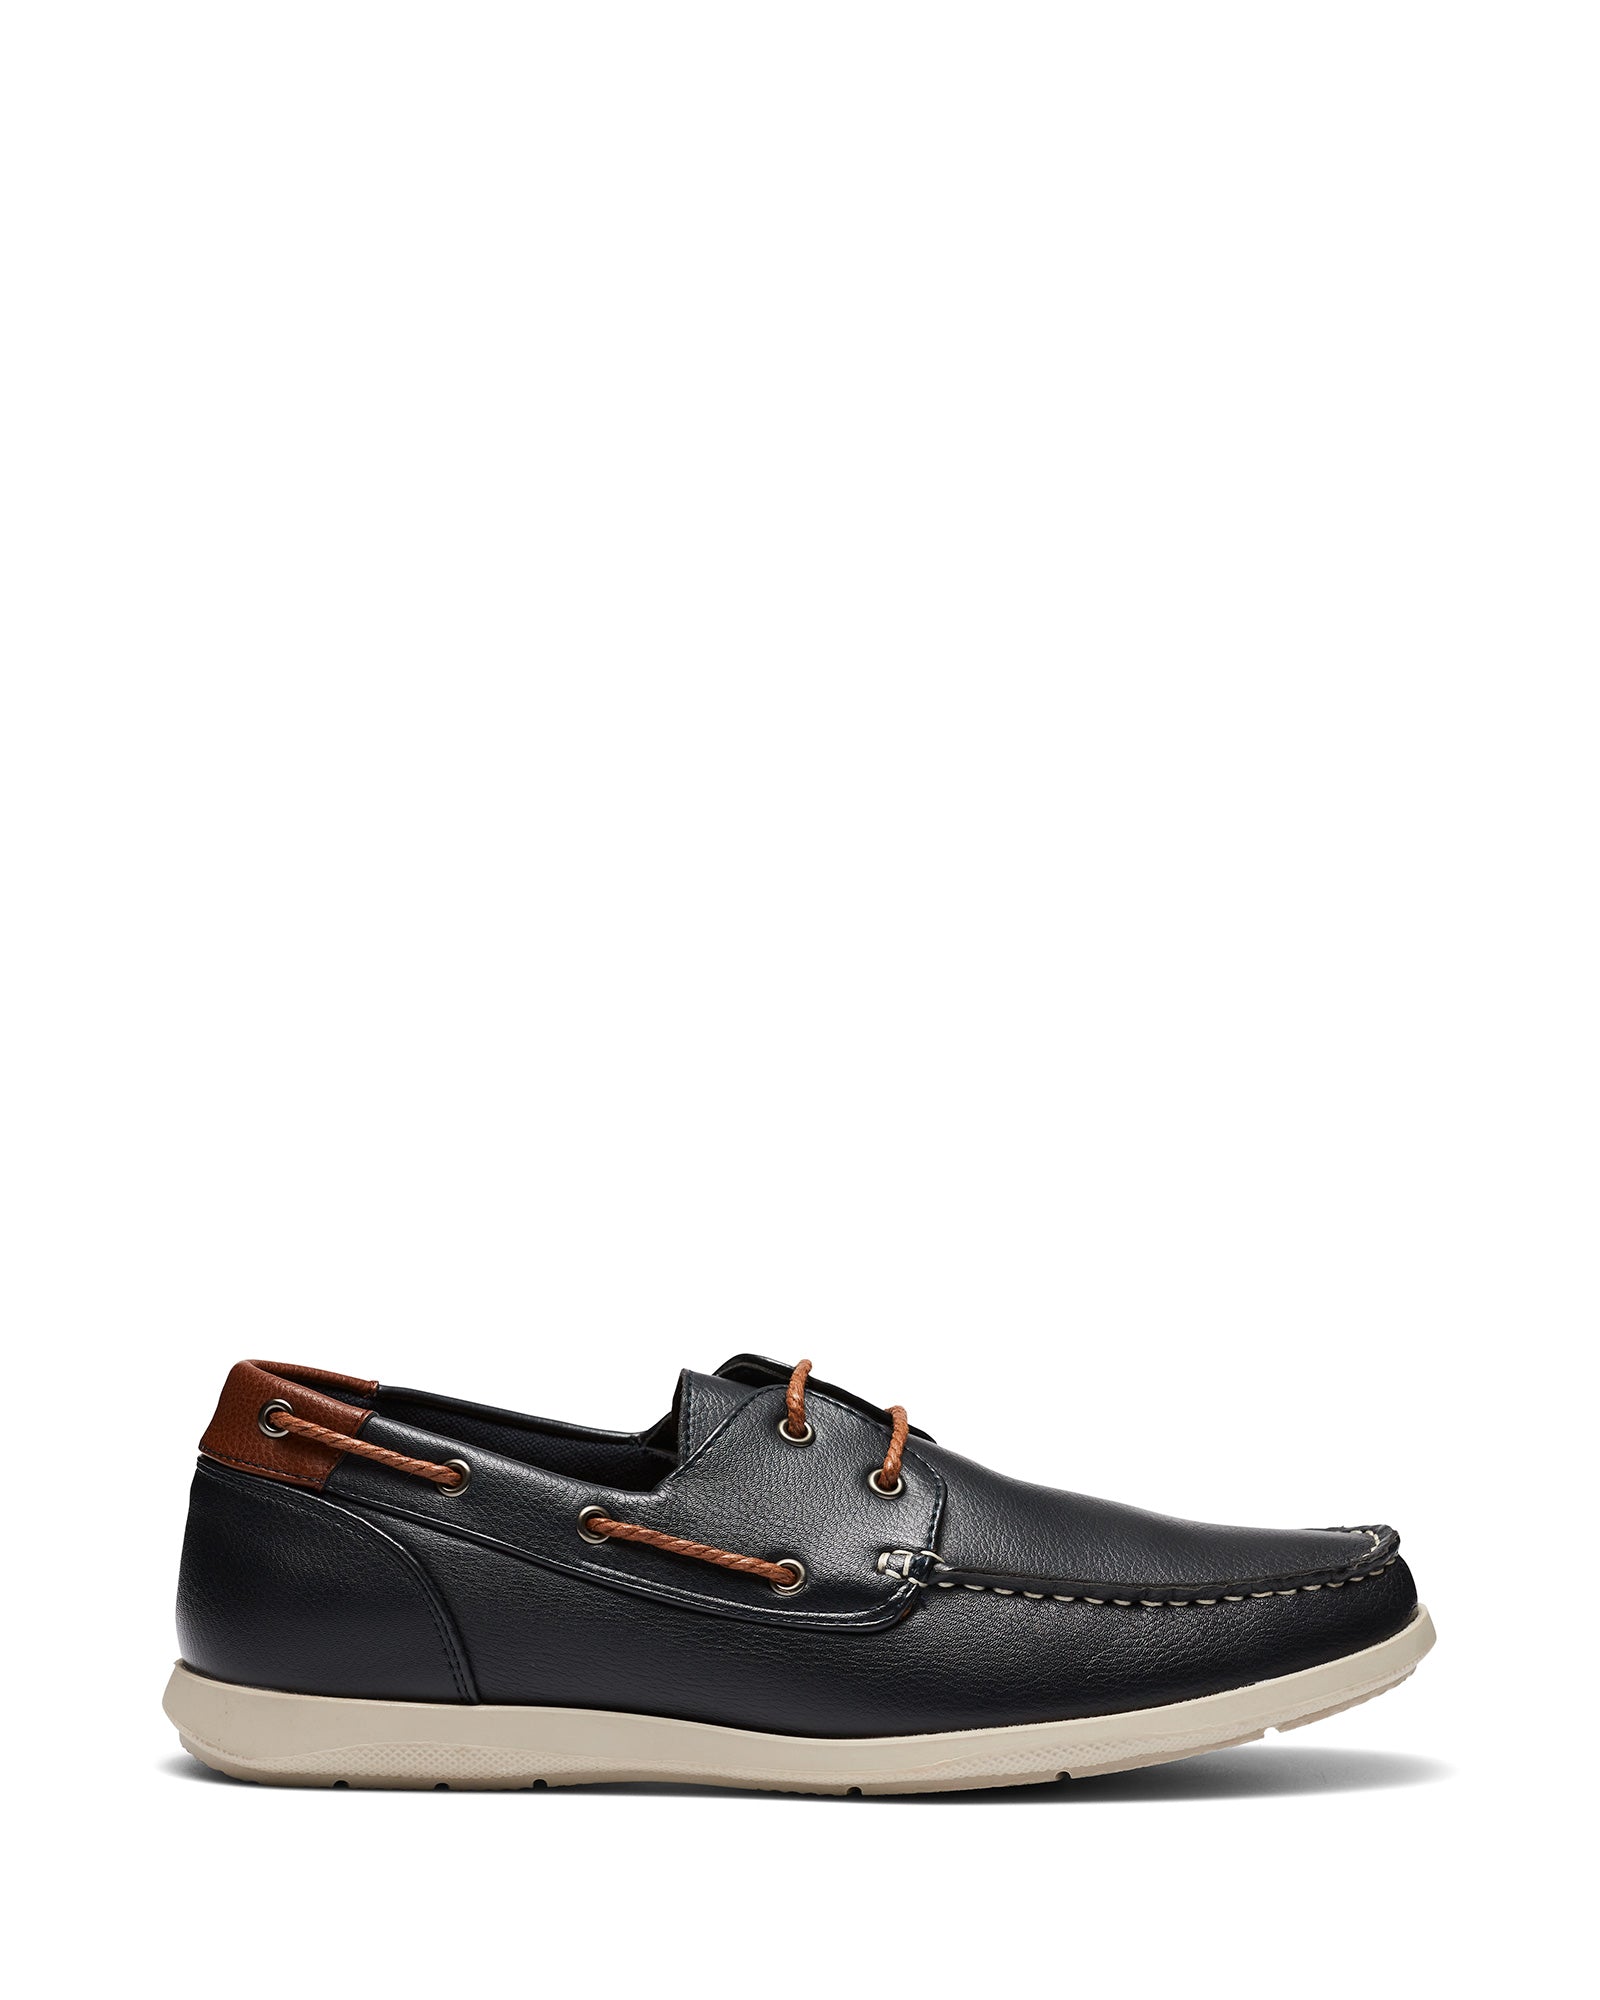 Uncut Shoes Hemsworth Navy | Men's Boat Shoe | Sneaker | Deck Shoe